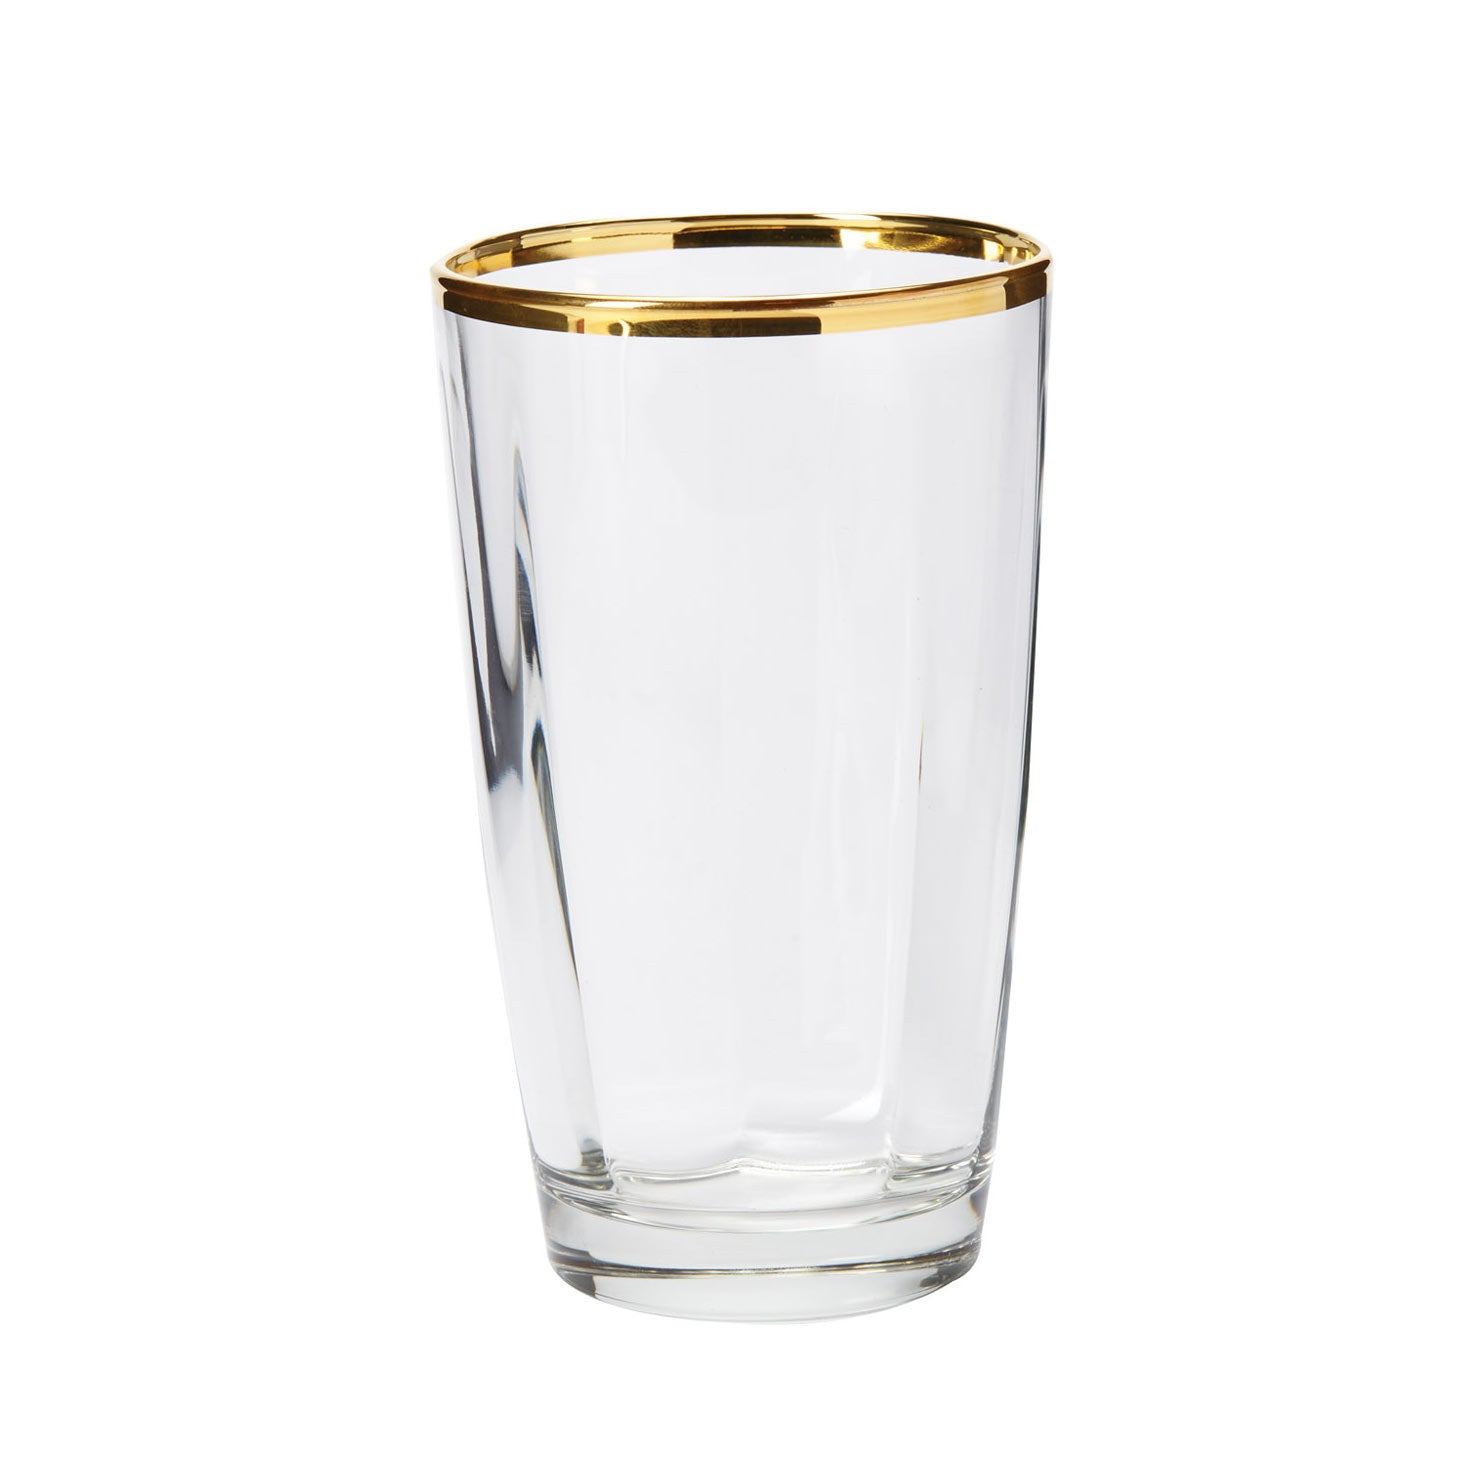 Vietri Optical Gold wine glass, set of 4 - Terrestra